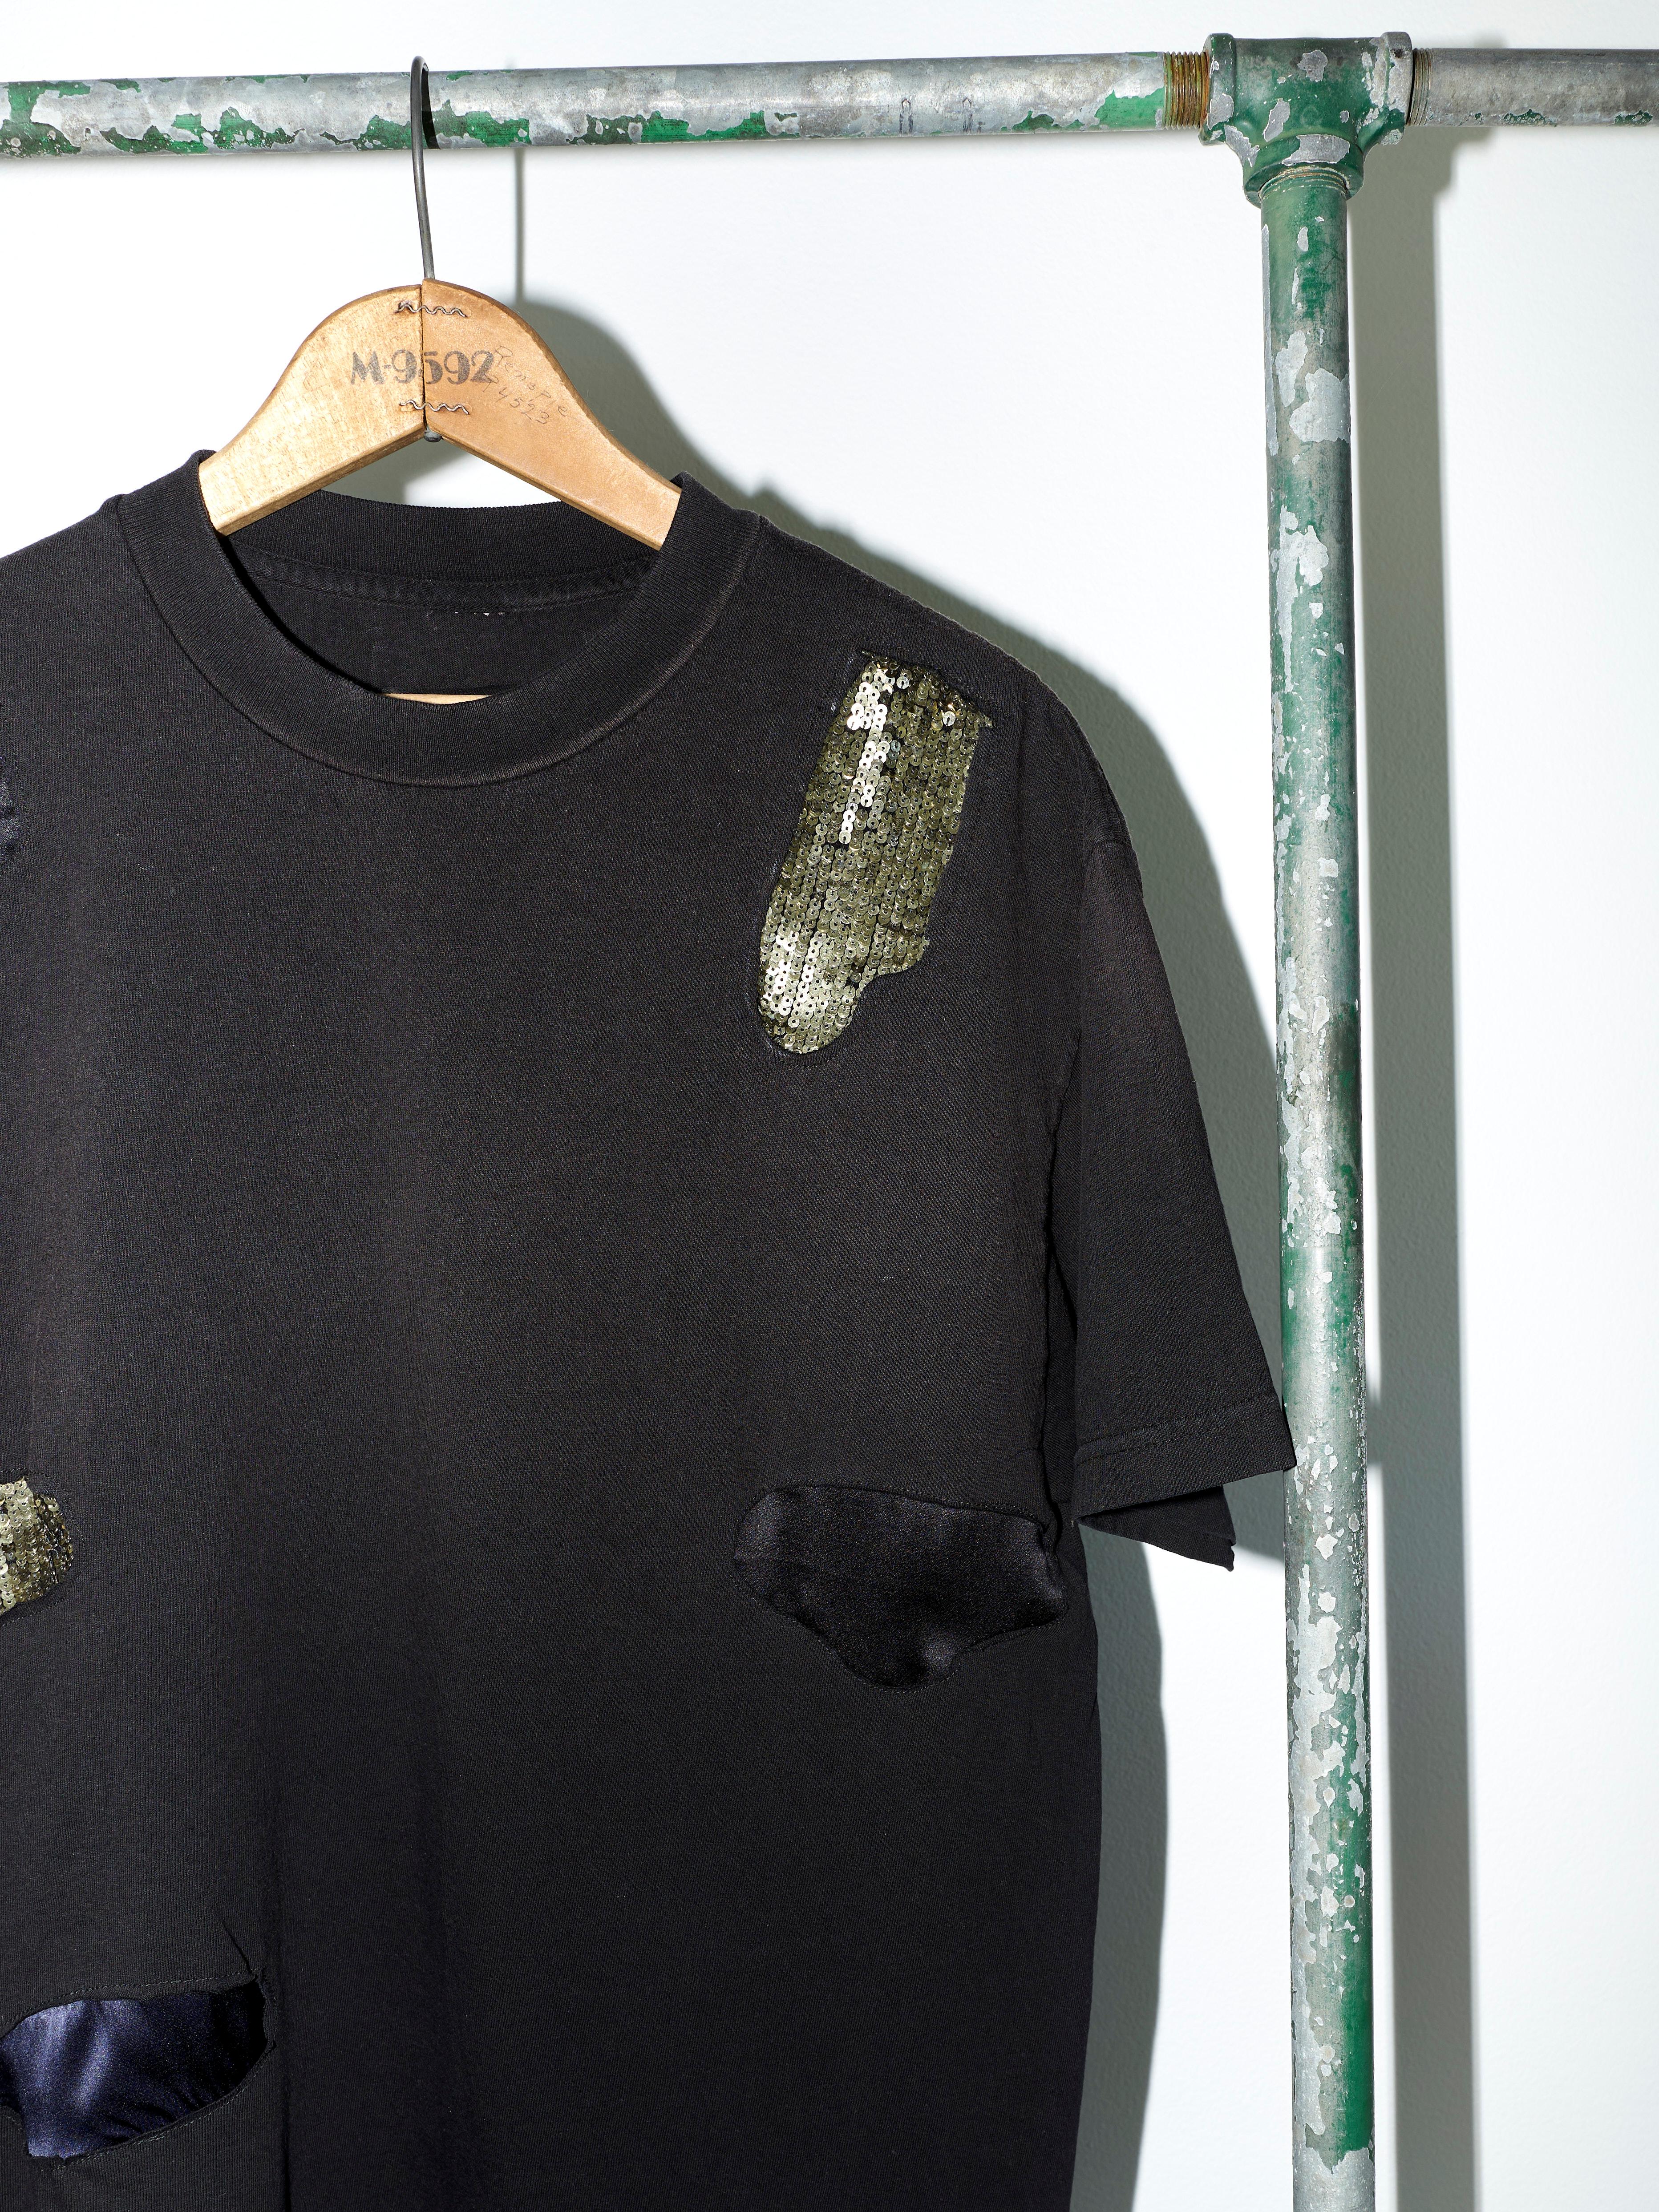 J Dauphin Black T-Shirt Embellished  Patch Work Sequin Silk Body Cotton  3